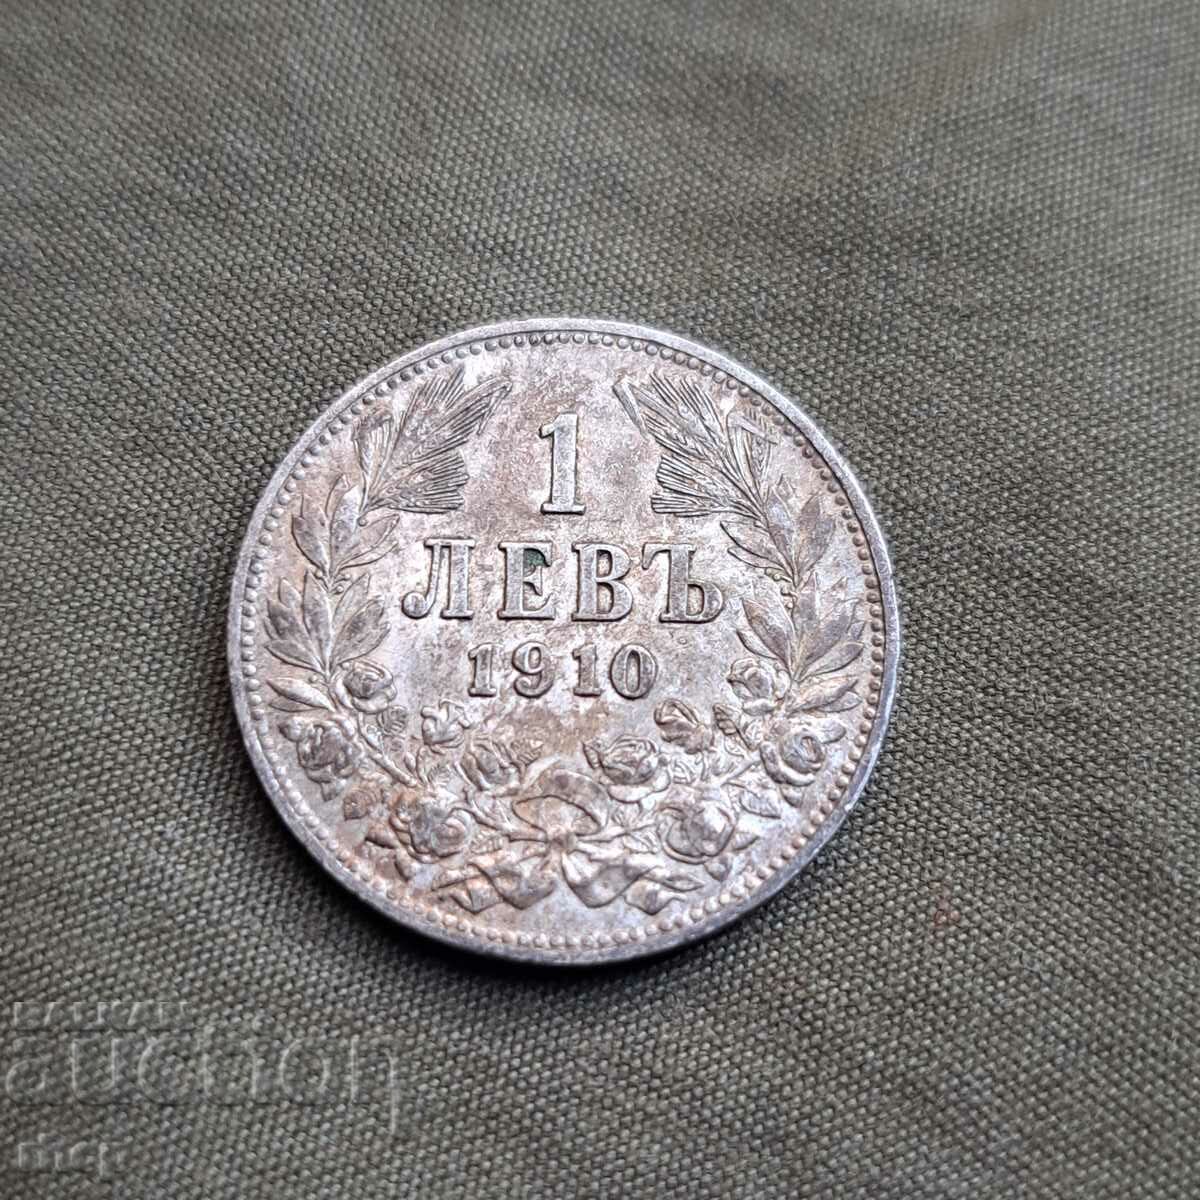 1 BGN 1910 coin patina